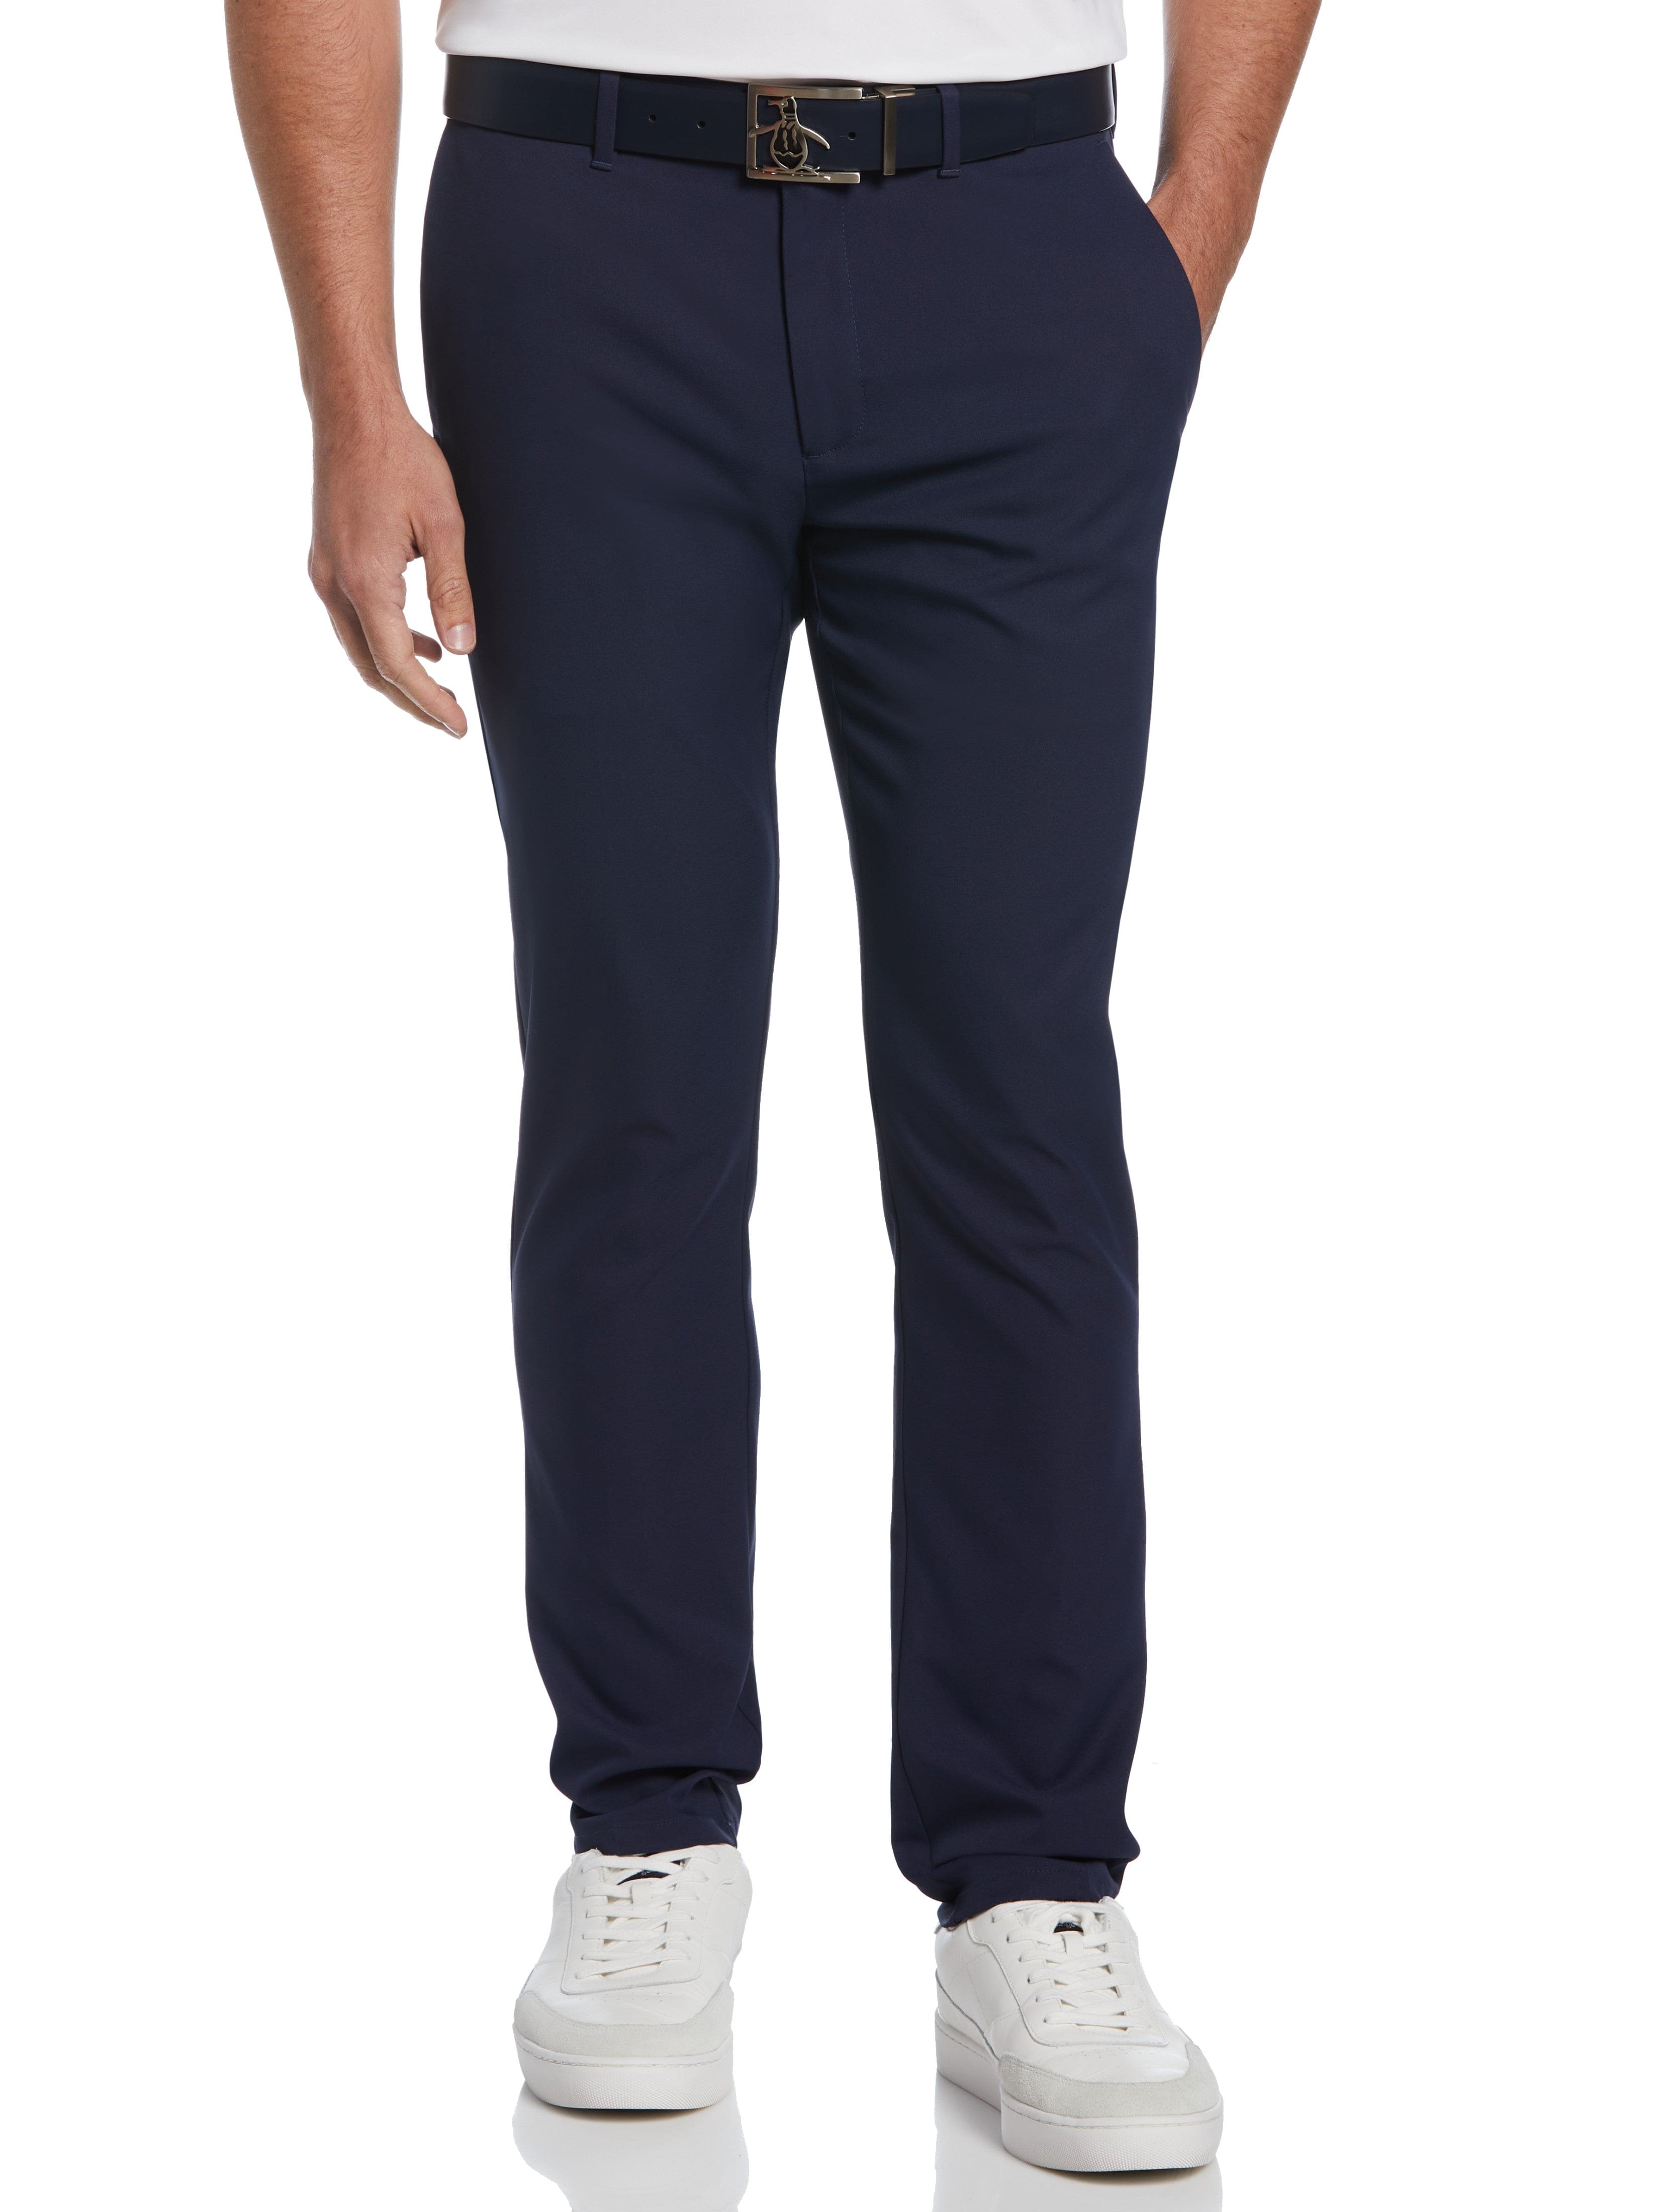 Original Penguin Mens Flat Front Solid Golf Pants, Size 38 x 34, Dark Navy Blue, 100% Polyester | Golf Apparel Shop